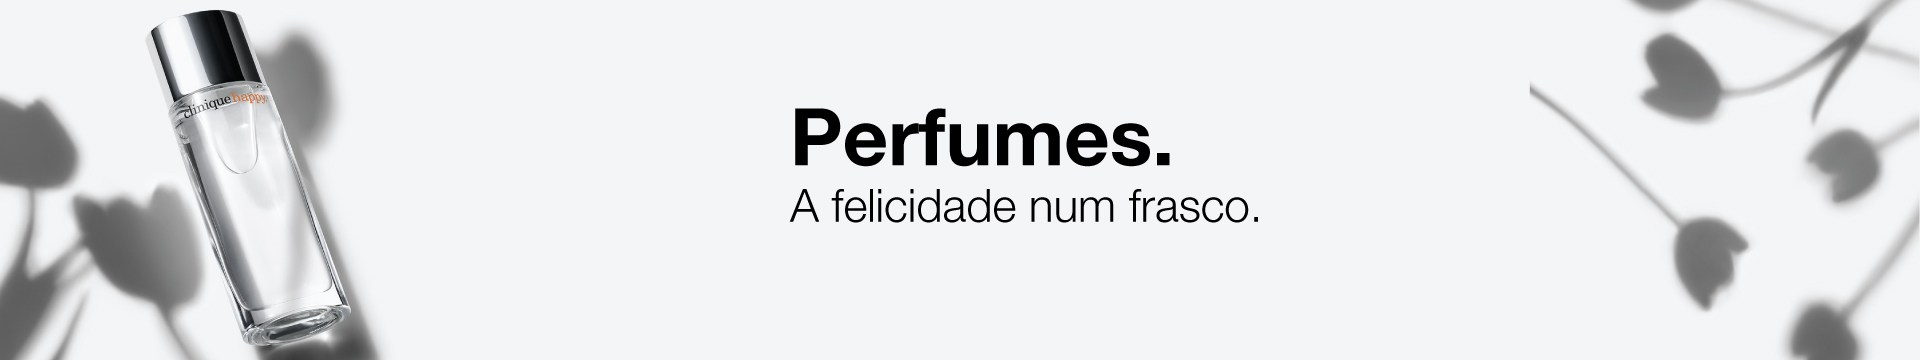 Perfumes Clinique